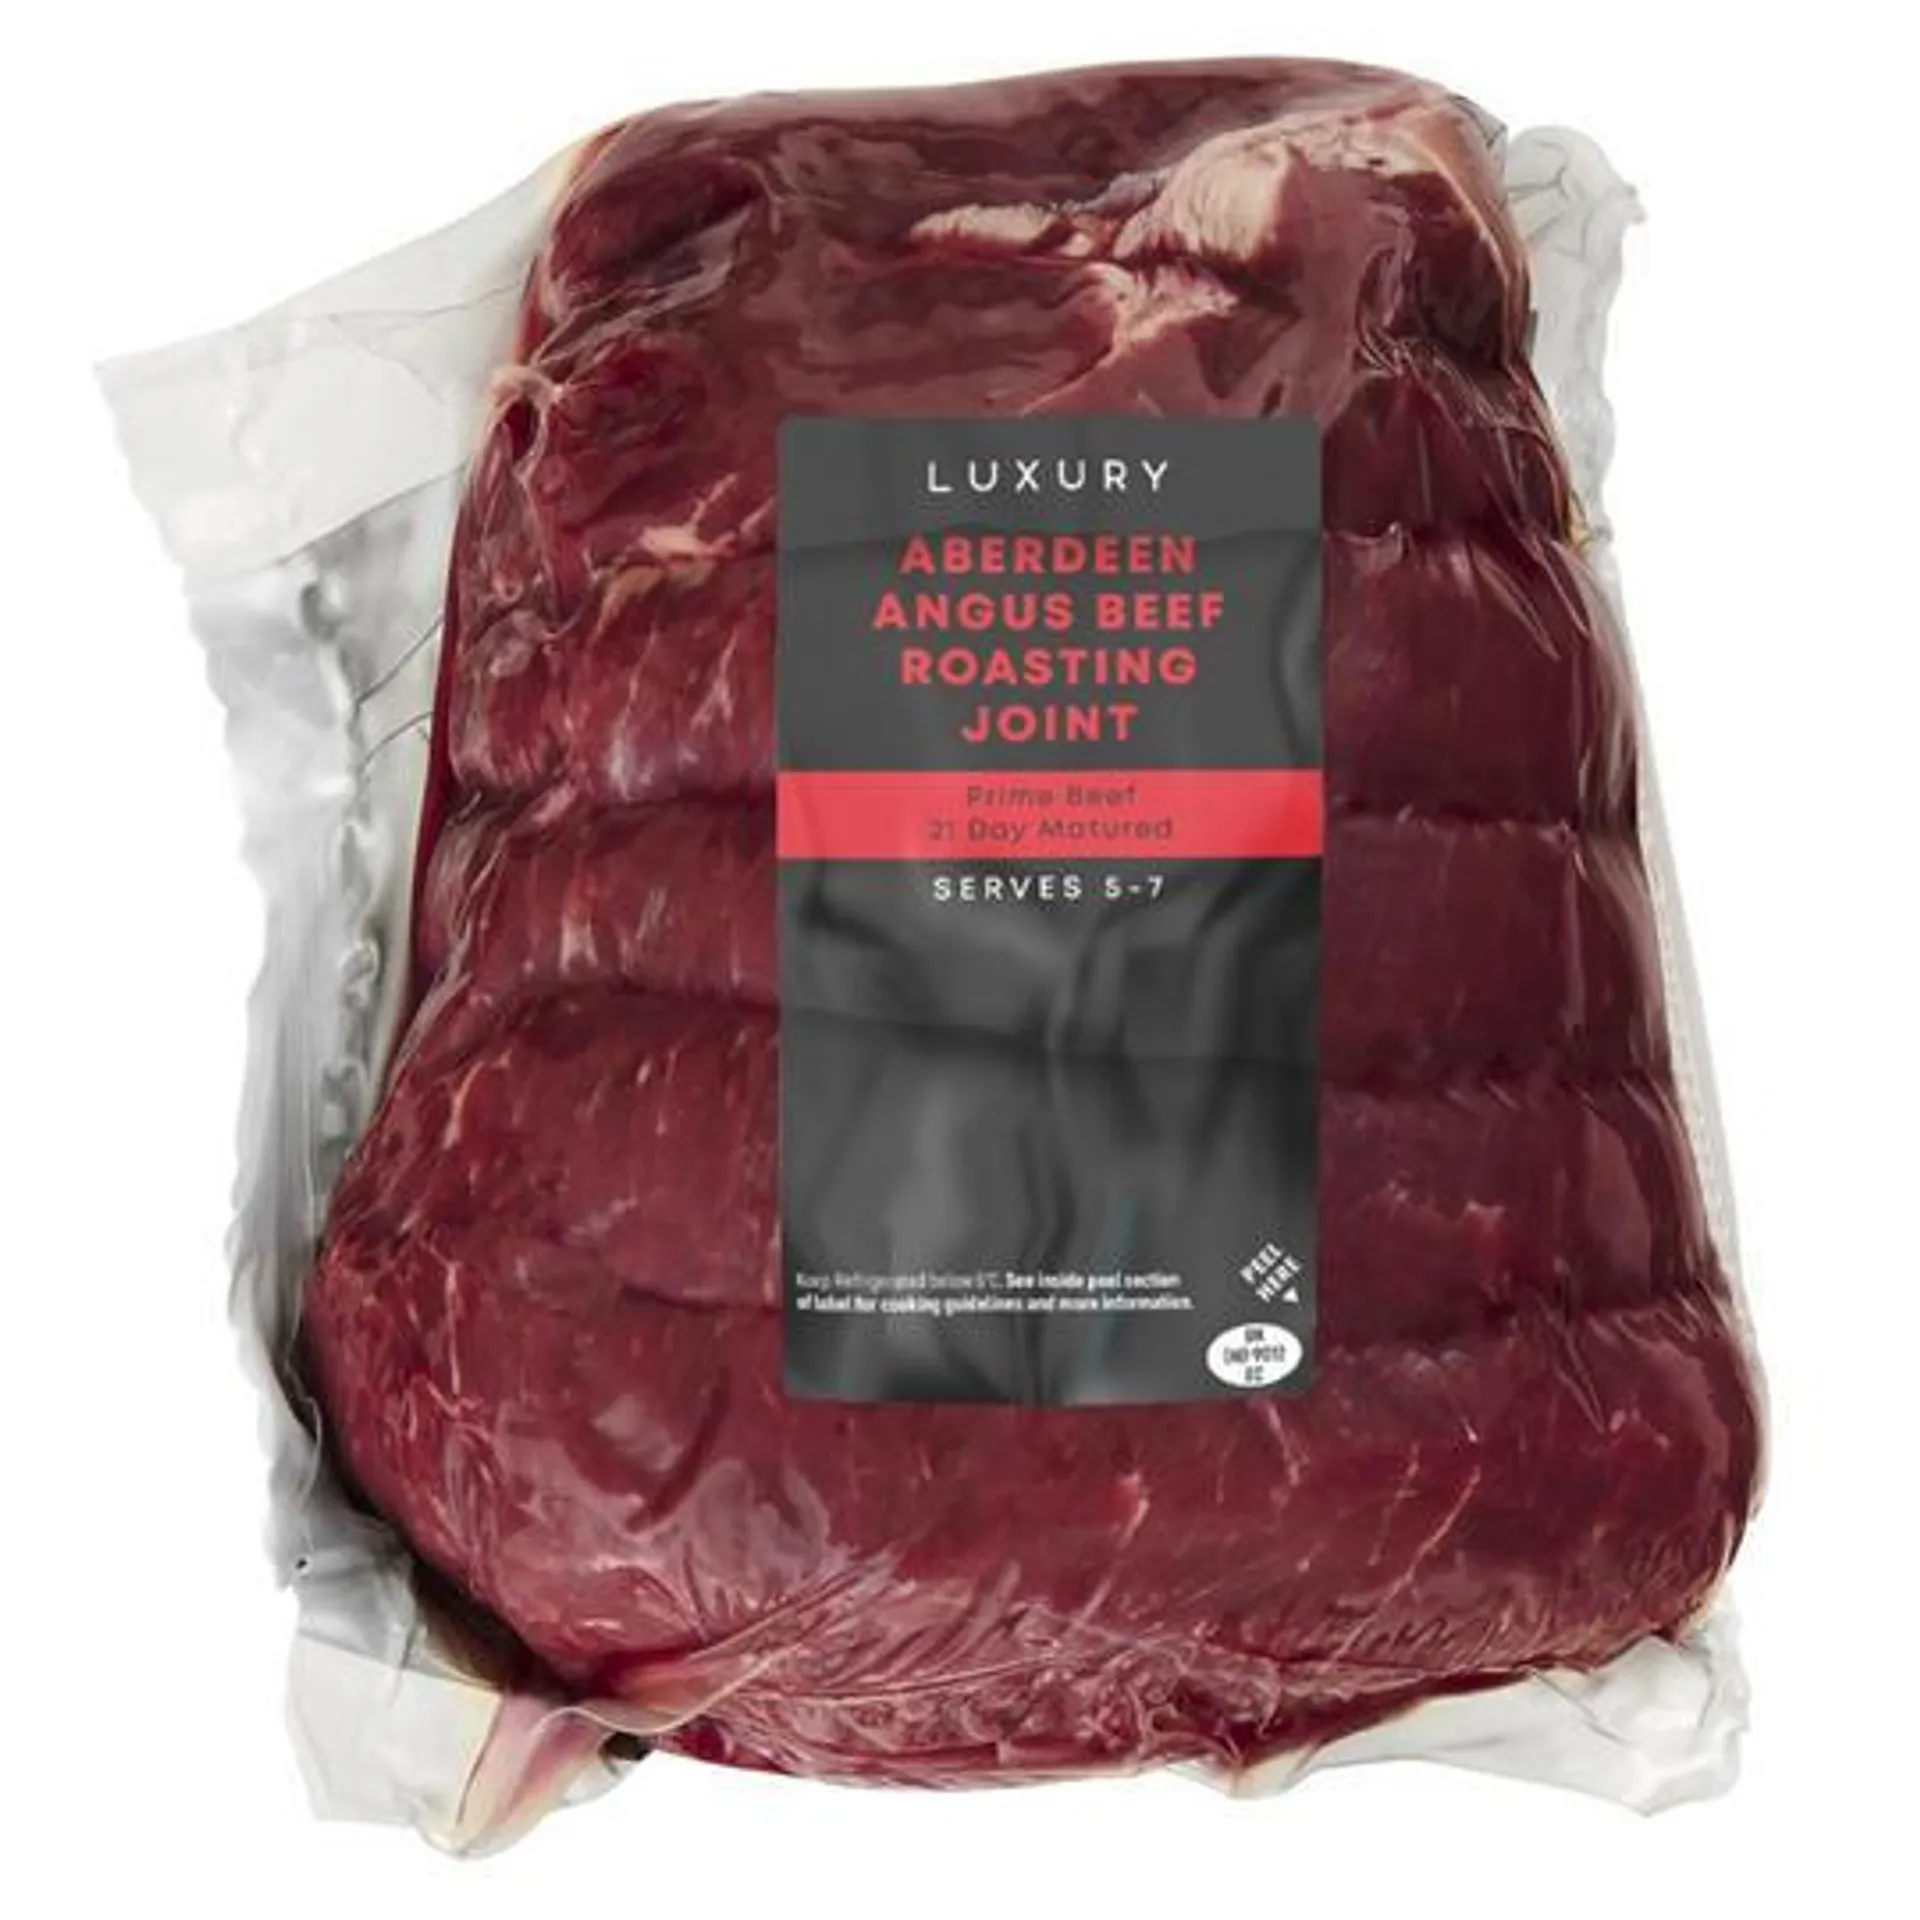 Iceland Luxury Aberdeen Angus Beef Roasting Joint 800g - 1.2kg